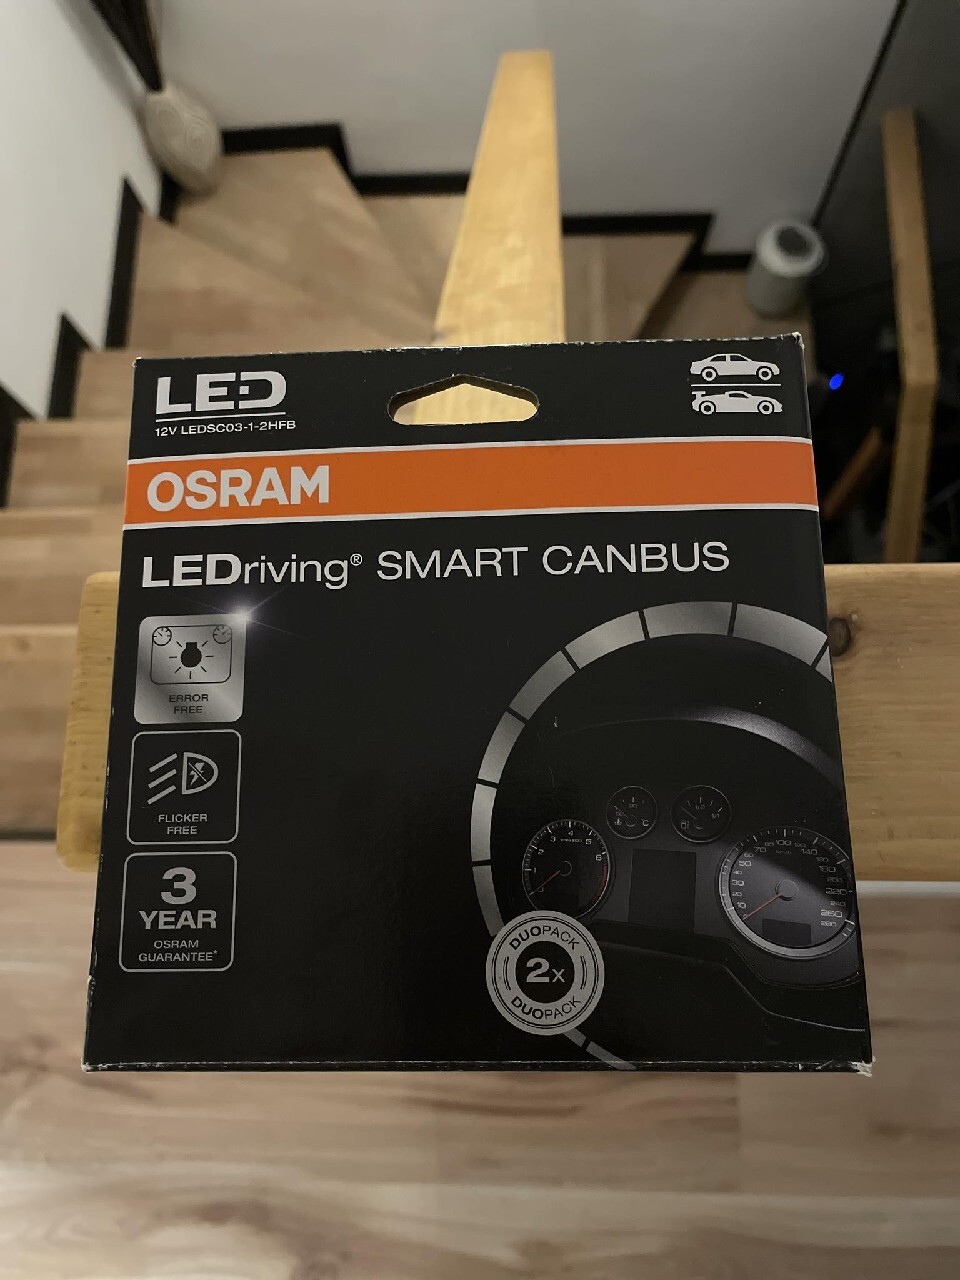 Osram LEDSC03-1-2HFB LEDriving Smart Canbus